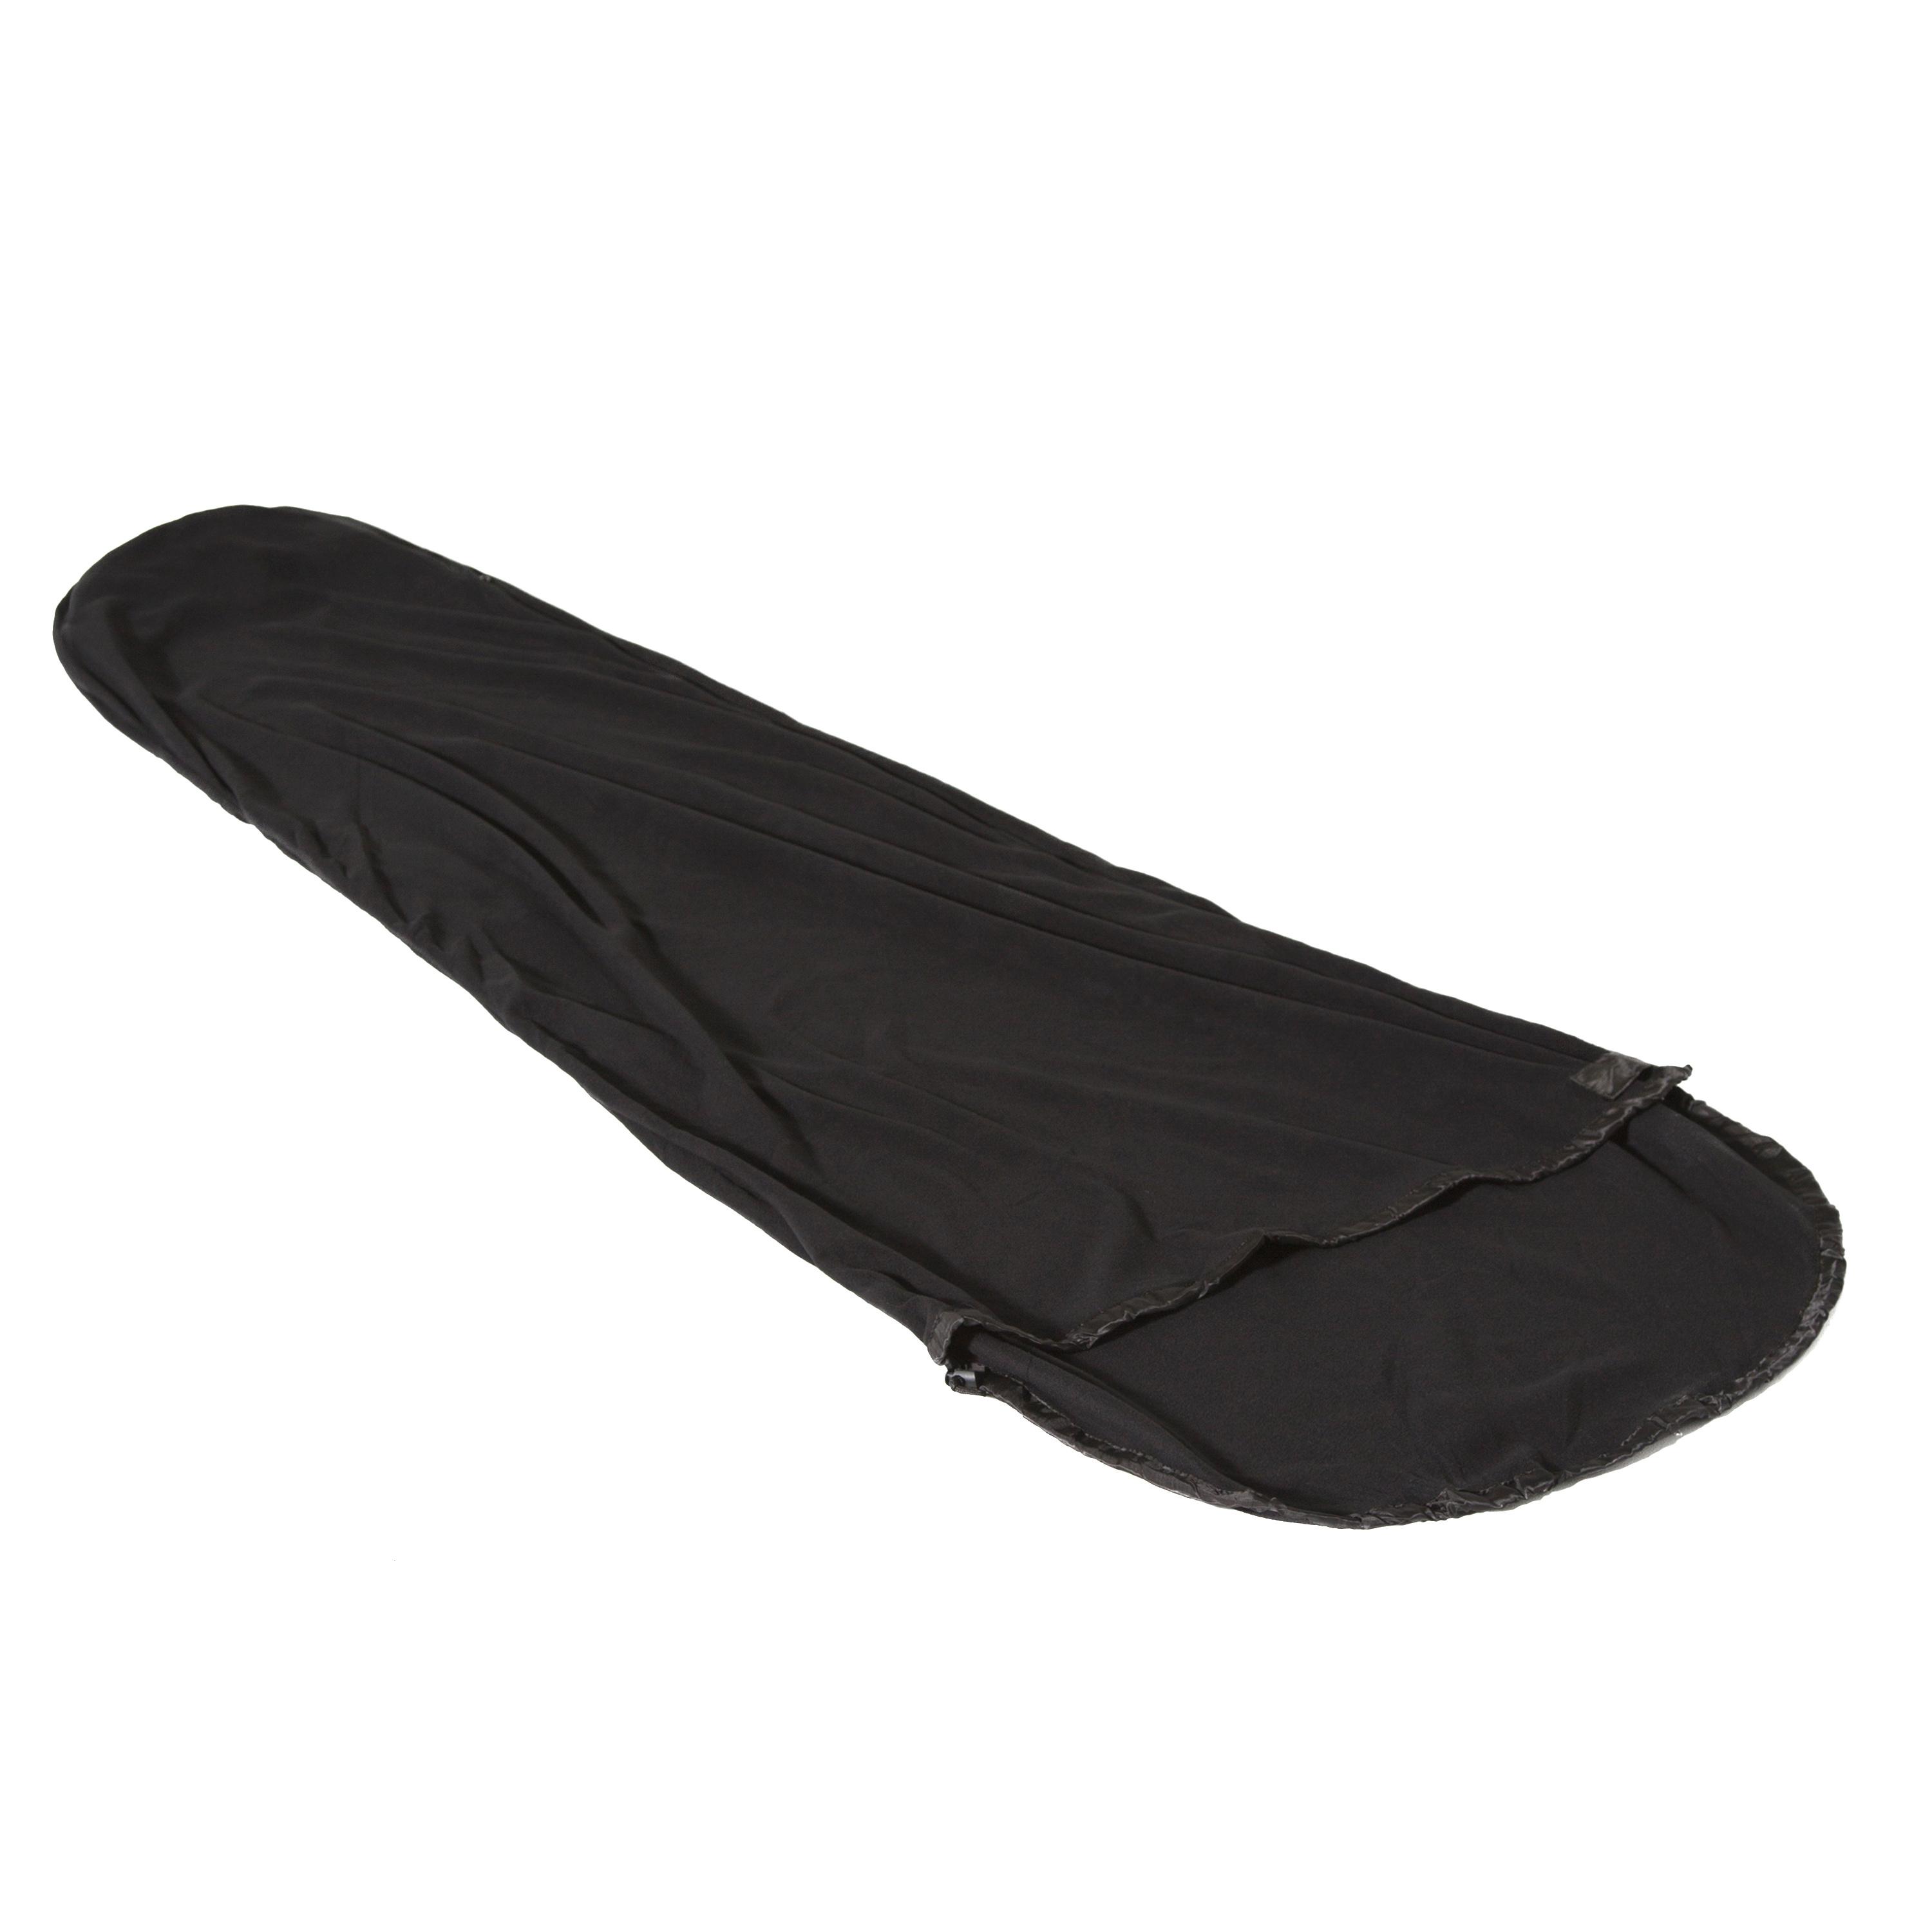 Eurohike Fleece Sleeping Bag Liner Dlx - Mummy - Black, Black